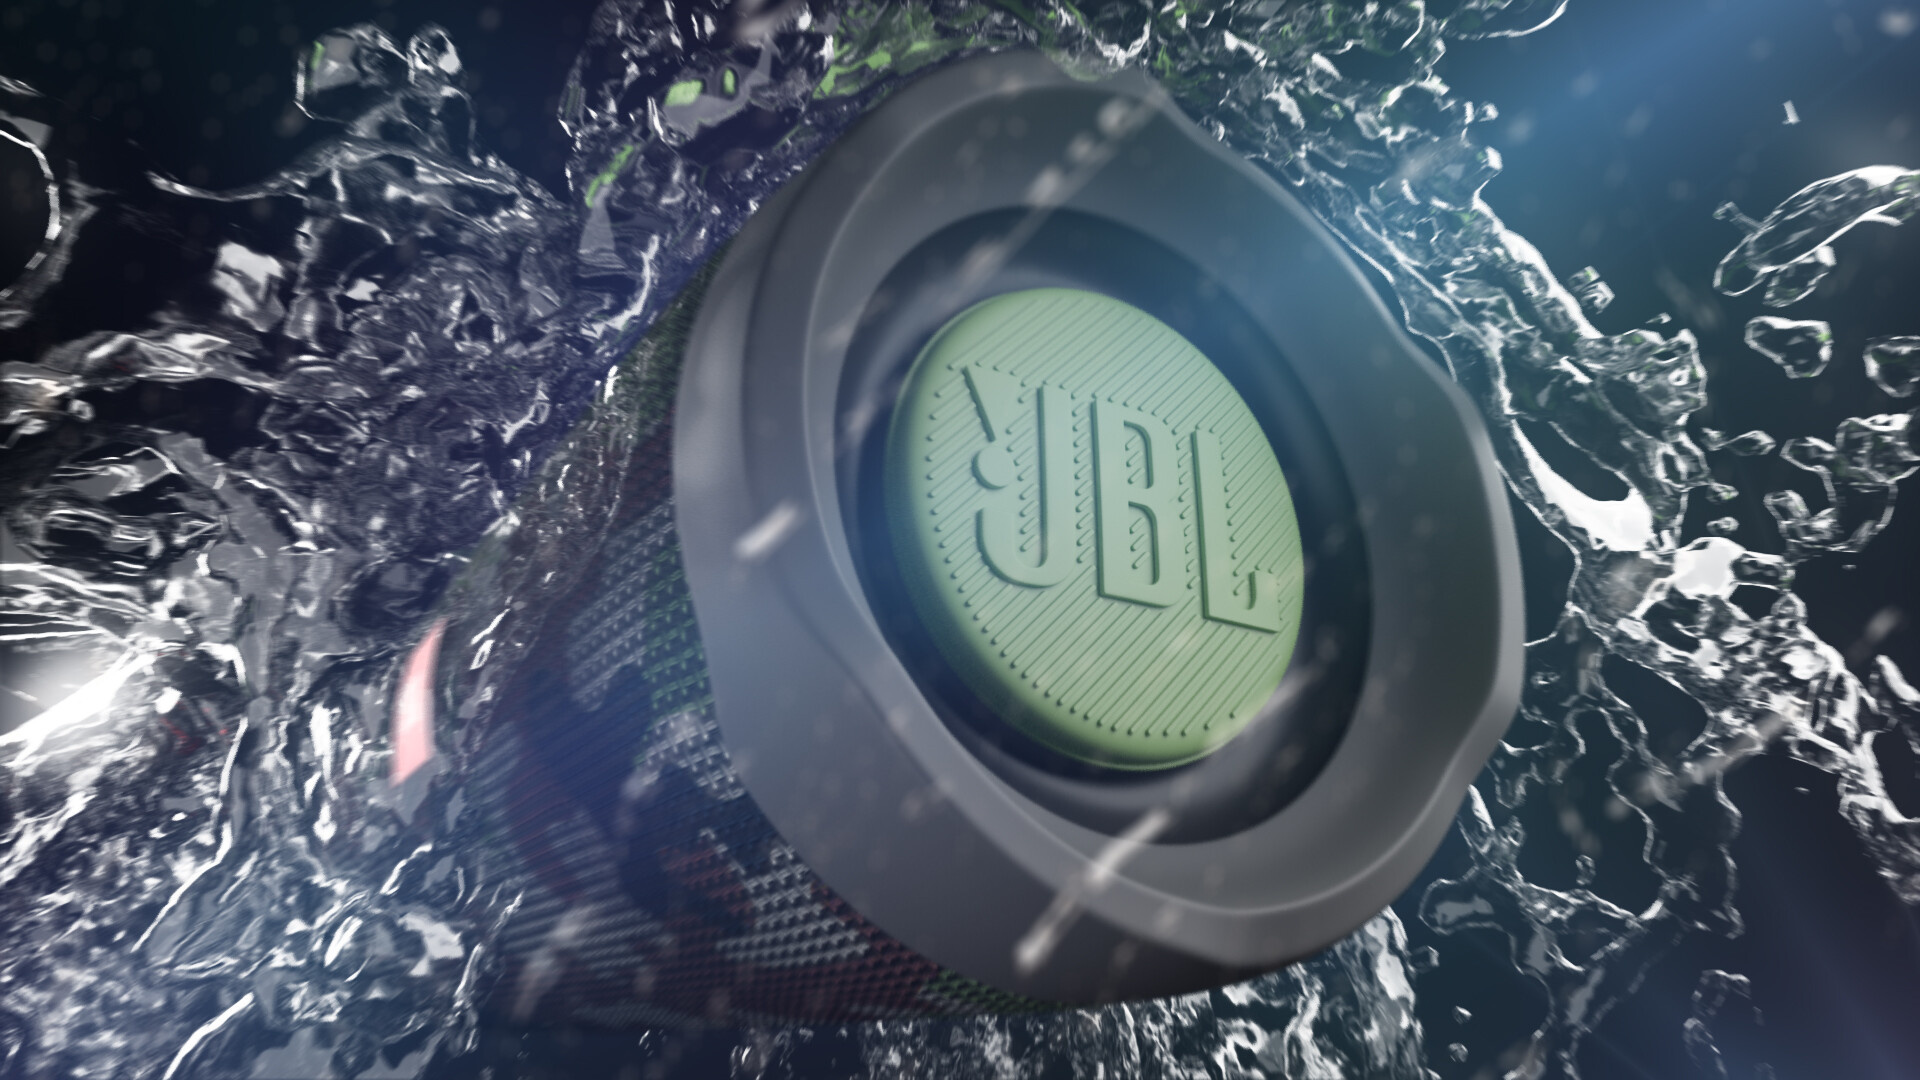 ArtStation JBL speaker, Still render, Speaker design, Digital artwork, 1920x1080 Full HD Desktop